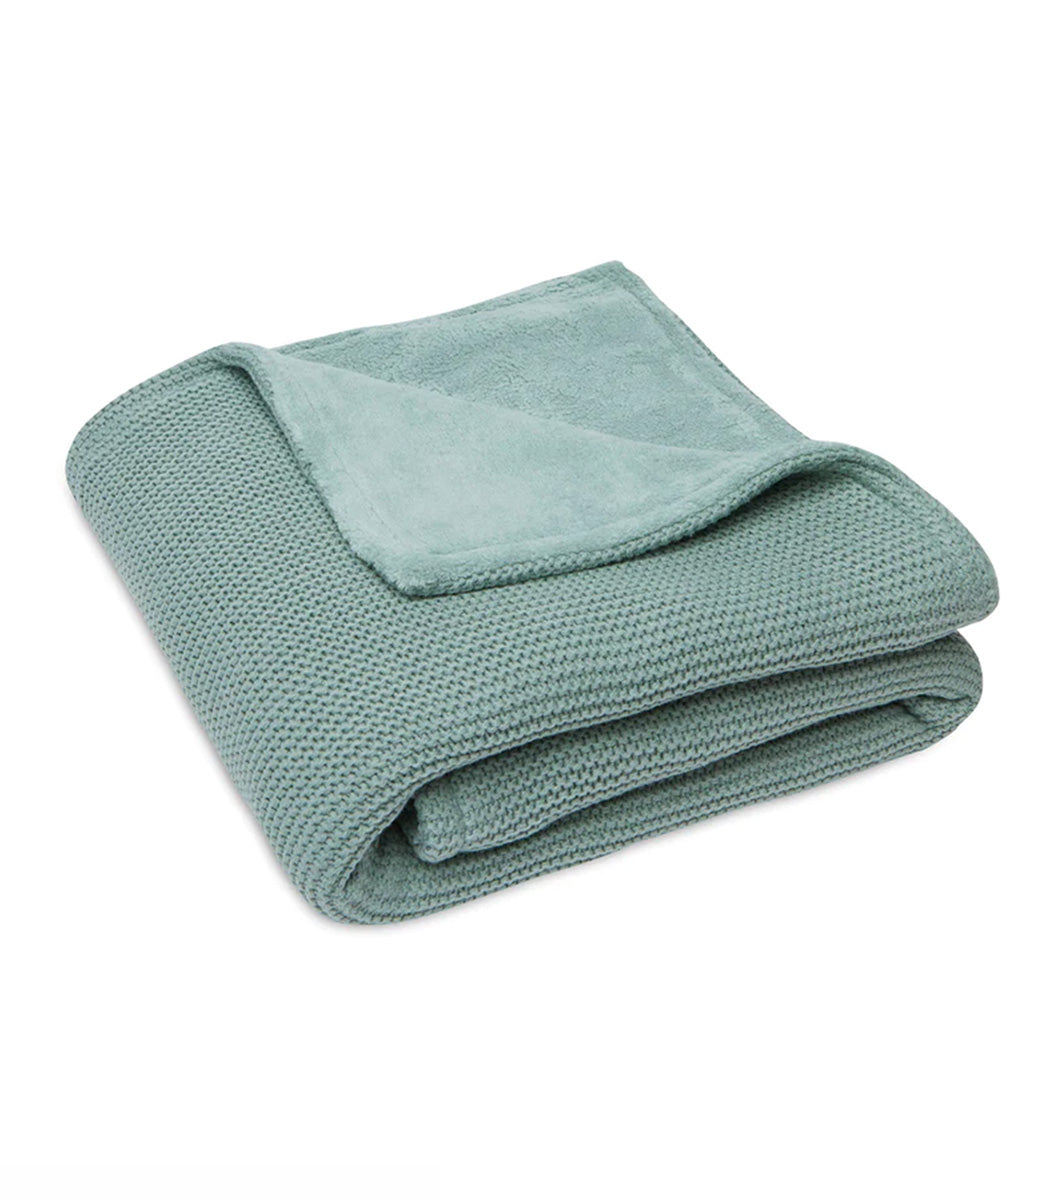 Winter blanket // fleece basic knit - Forest green